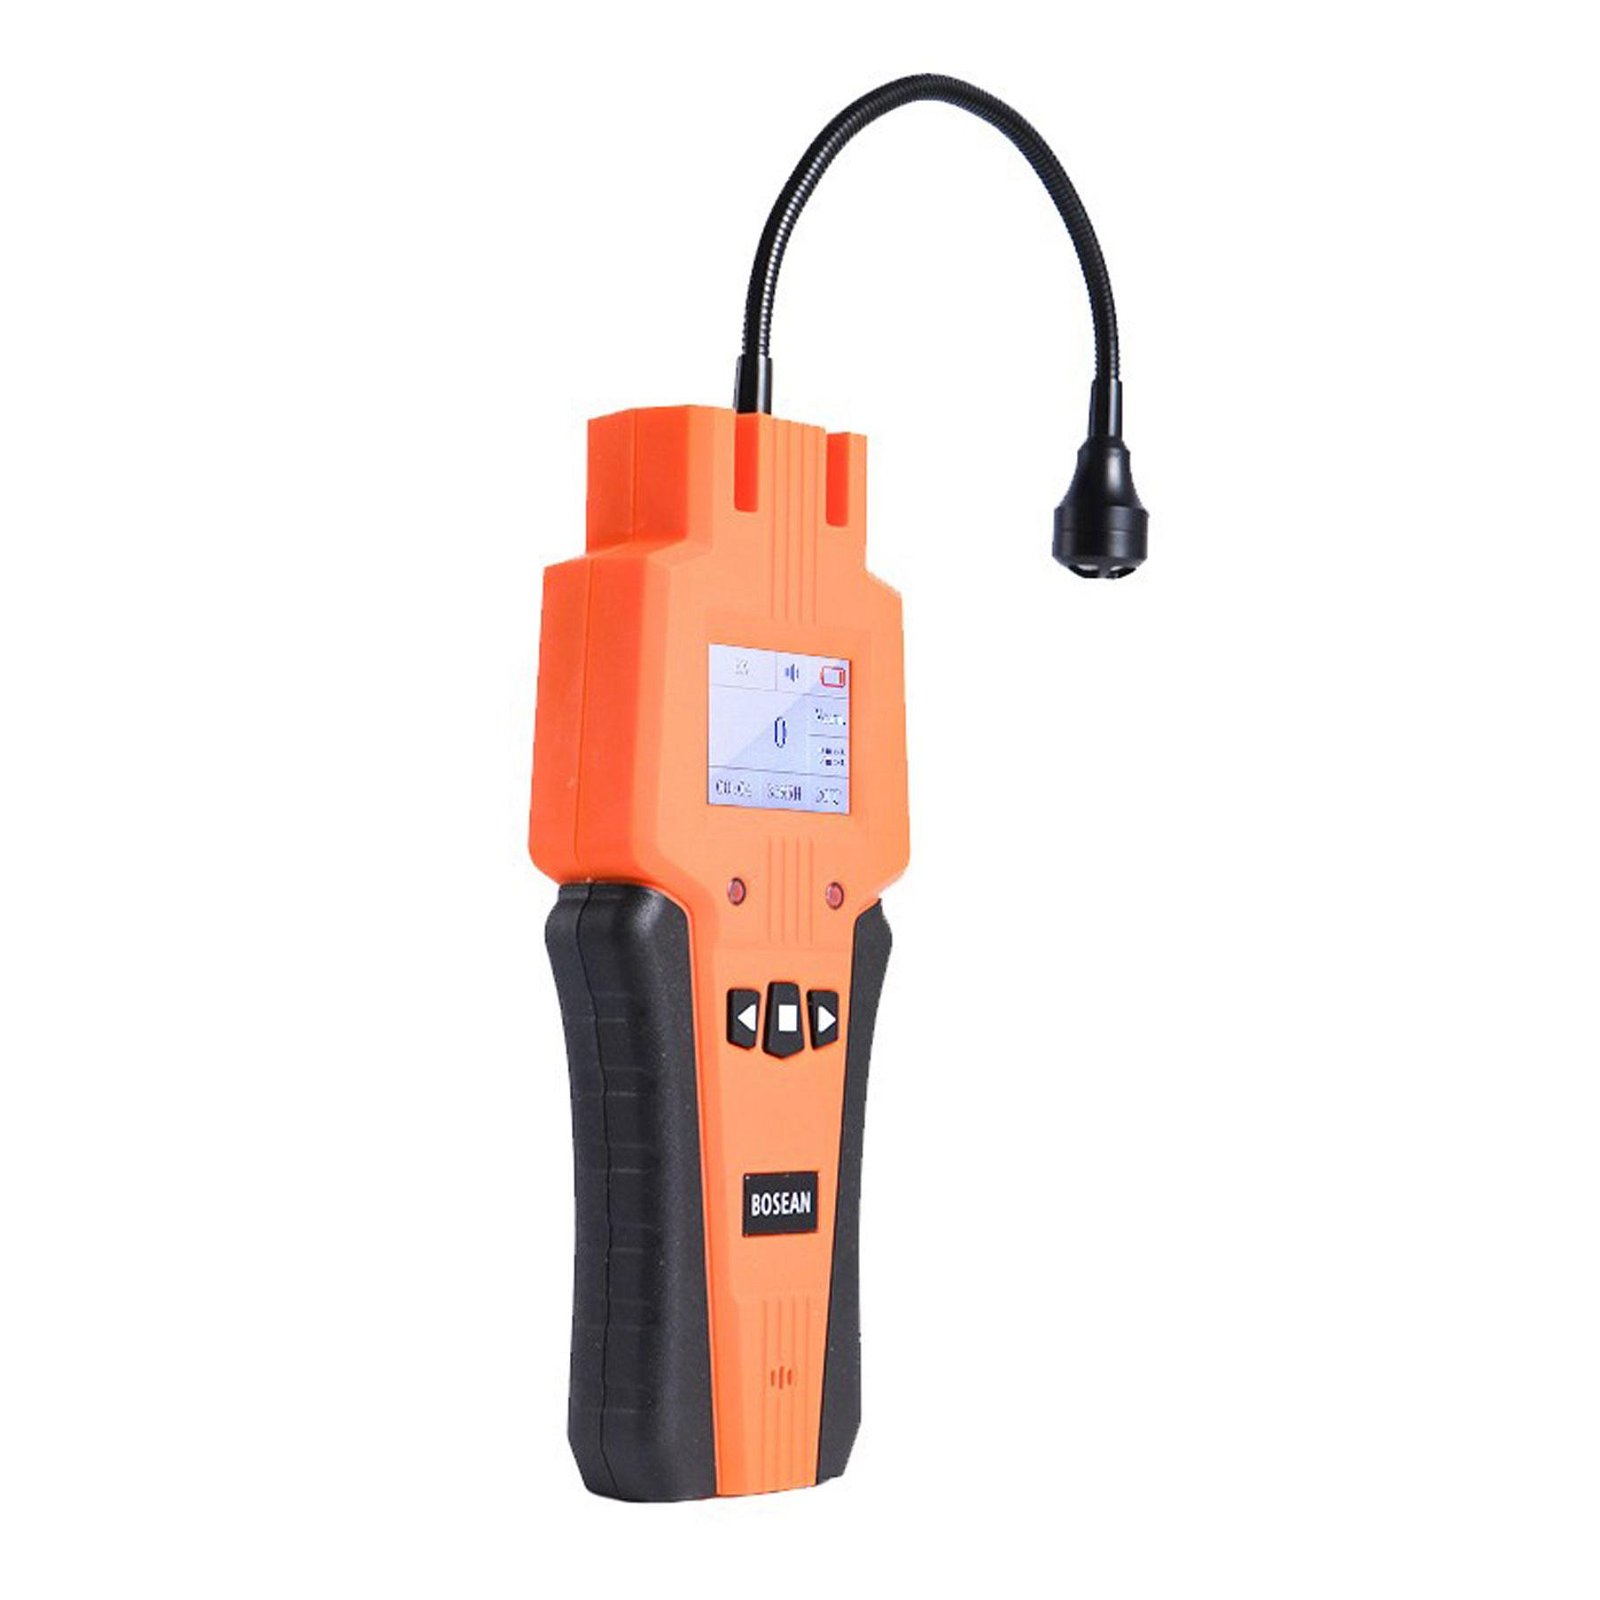 Ammonia Gas Detector K-300 Portable NH3 leak Gas Detector Gas Analyzer